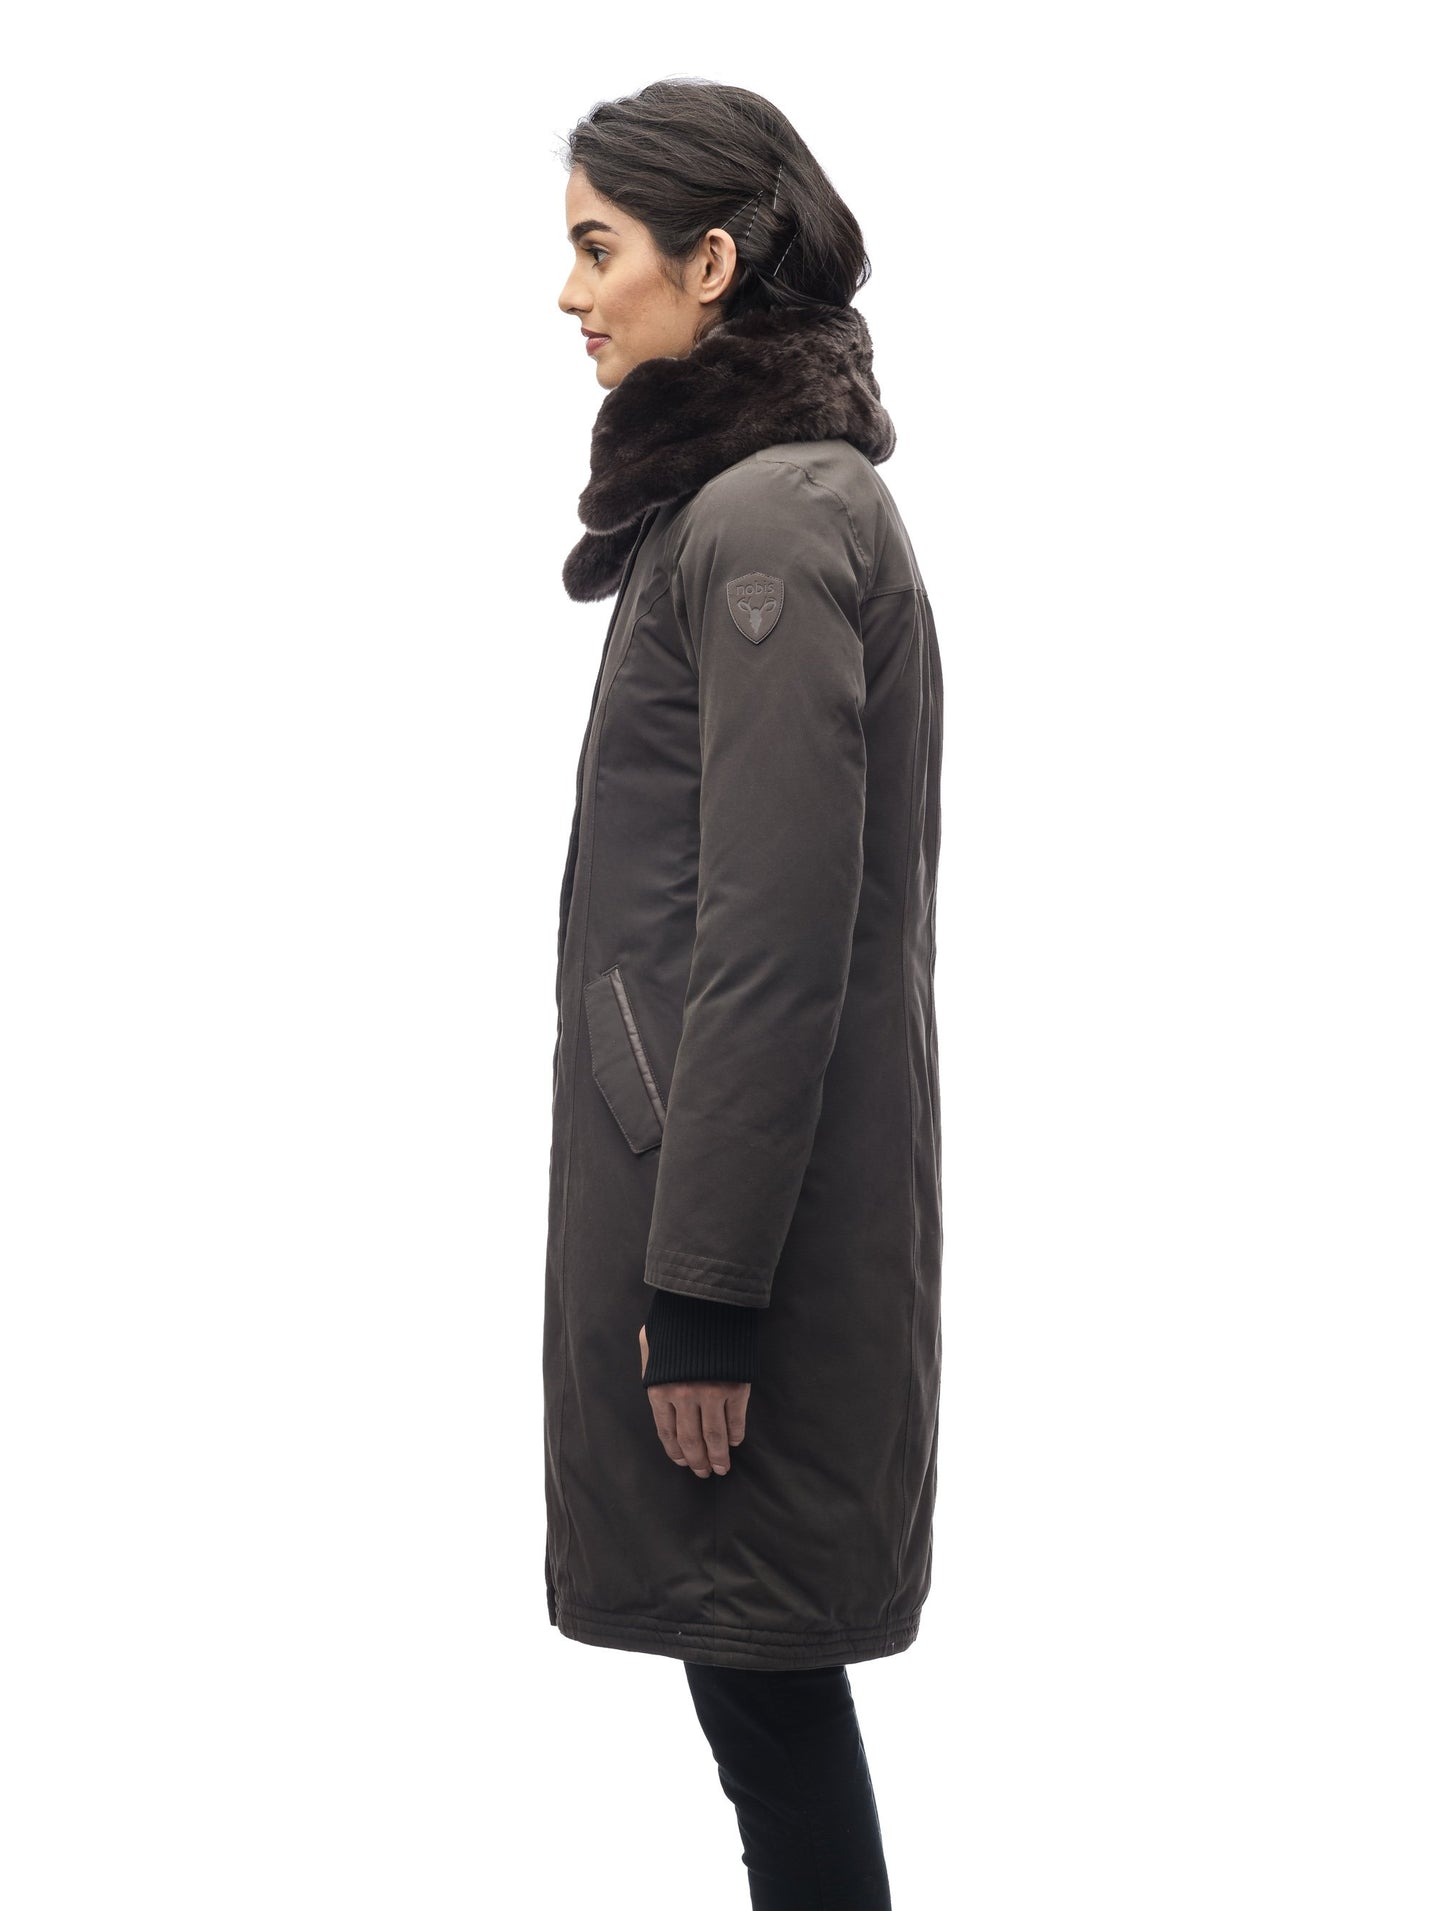 Women's down filled overcoat with fur trim in Dark Brown